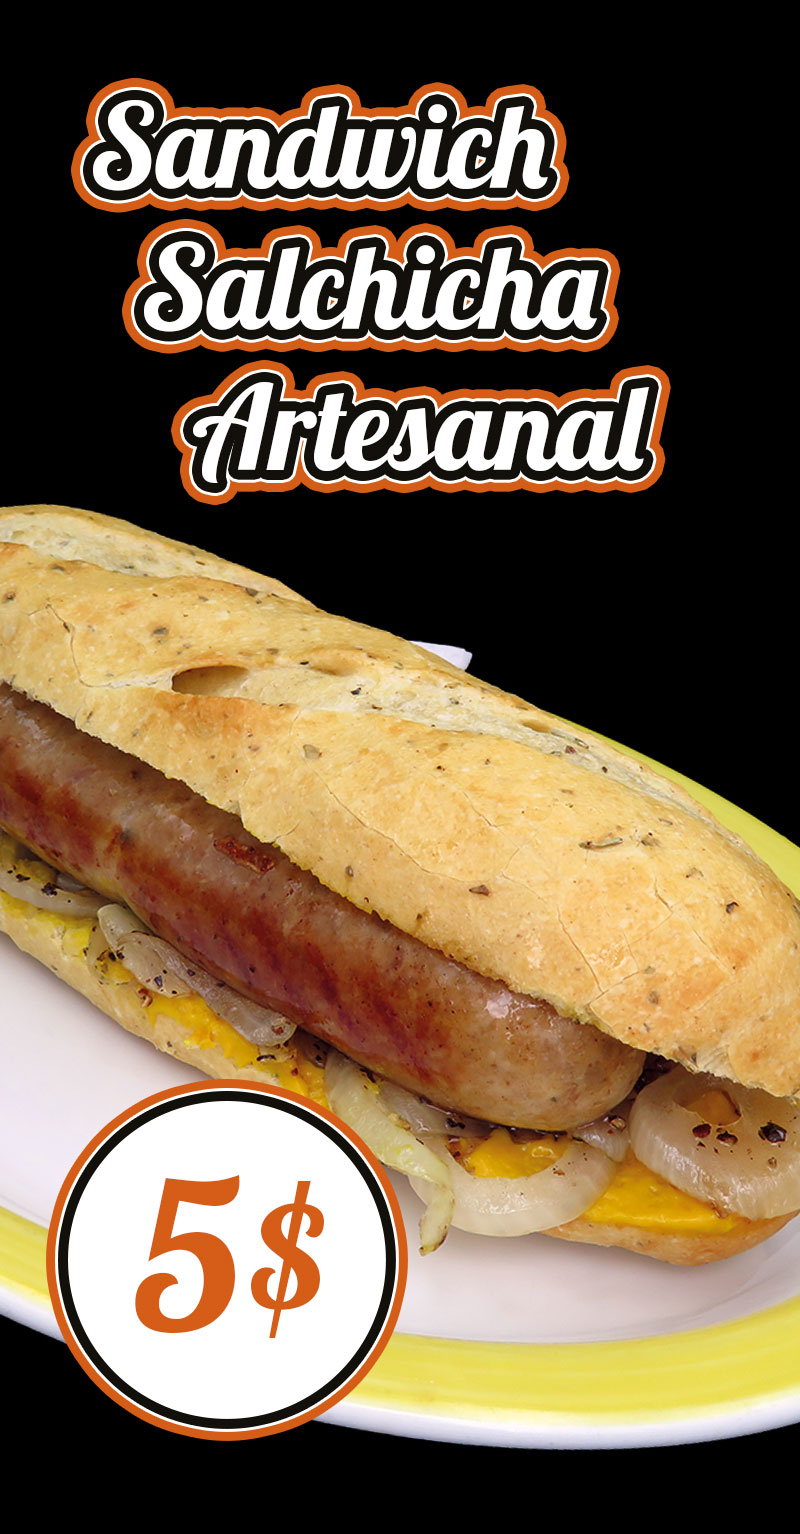 Sandwich Salchicha Artesanal